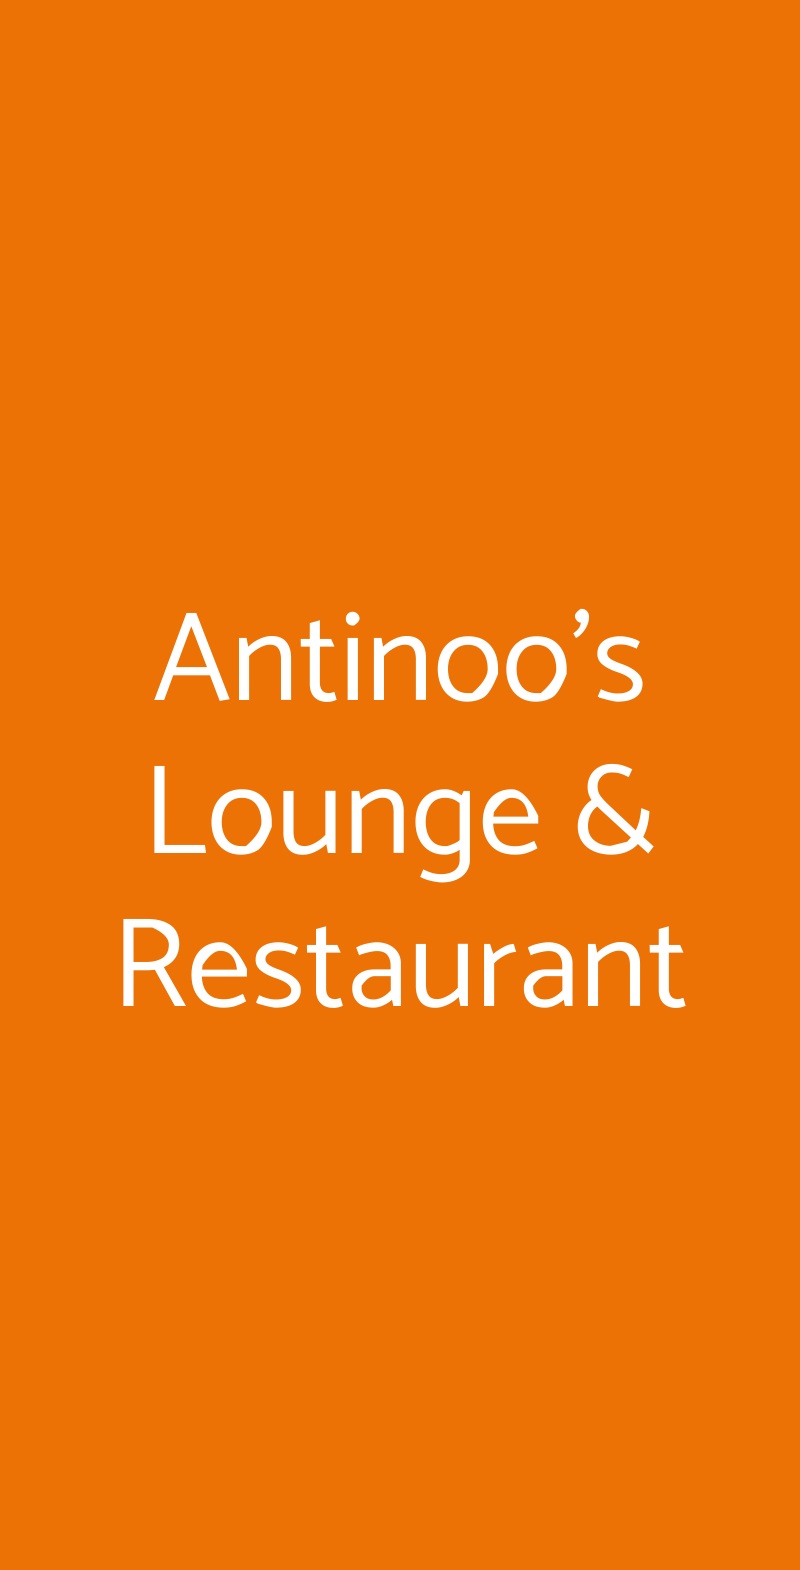 Antinoo's Lounge & Restaurant Venezia menù 1 pagina